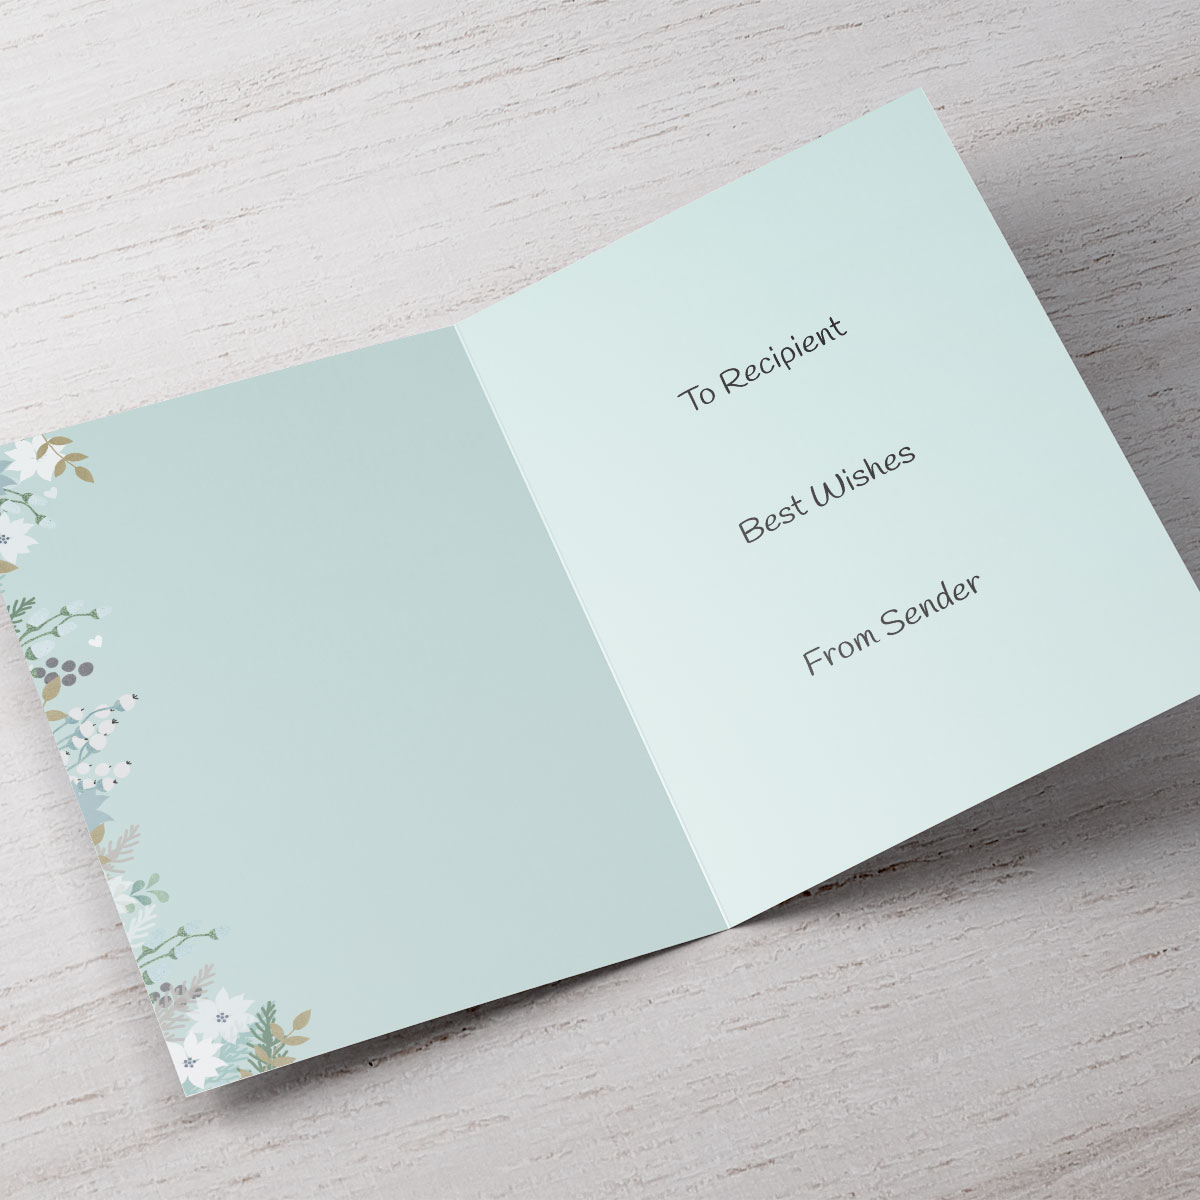 Personalised Wedding Card - Be My Bridesmaid Floral Blue